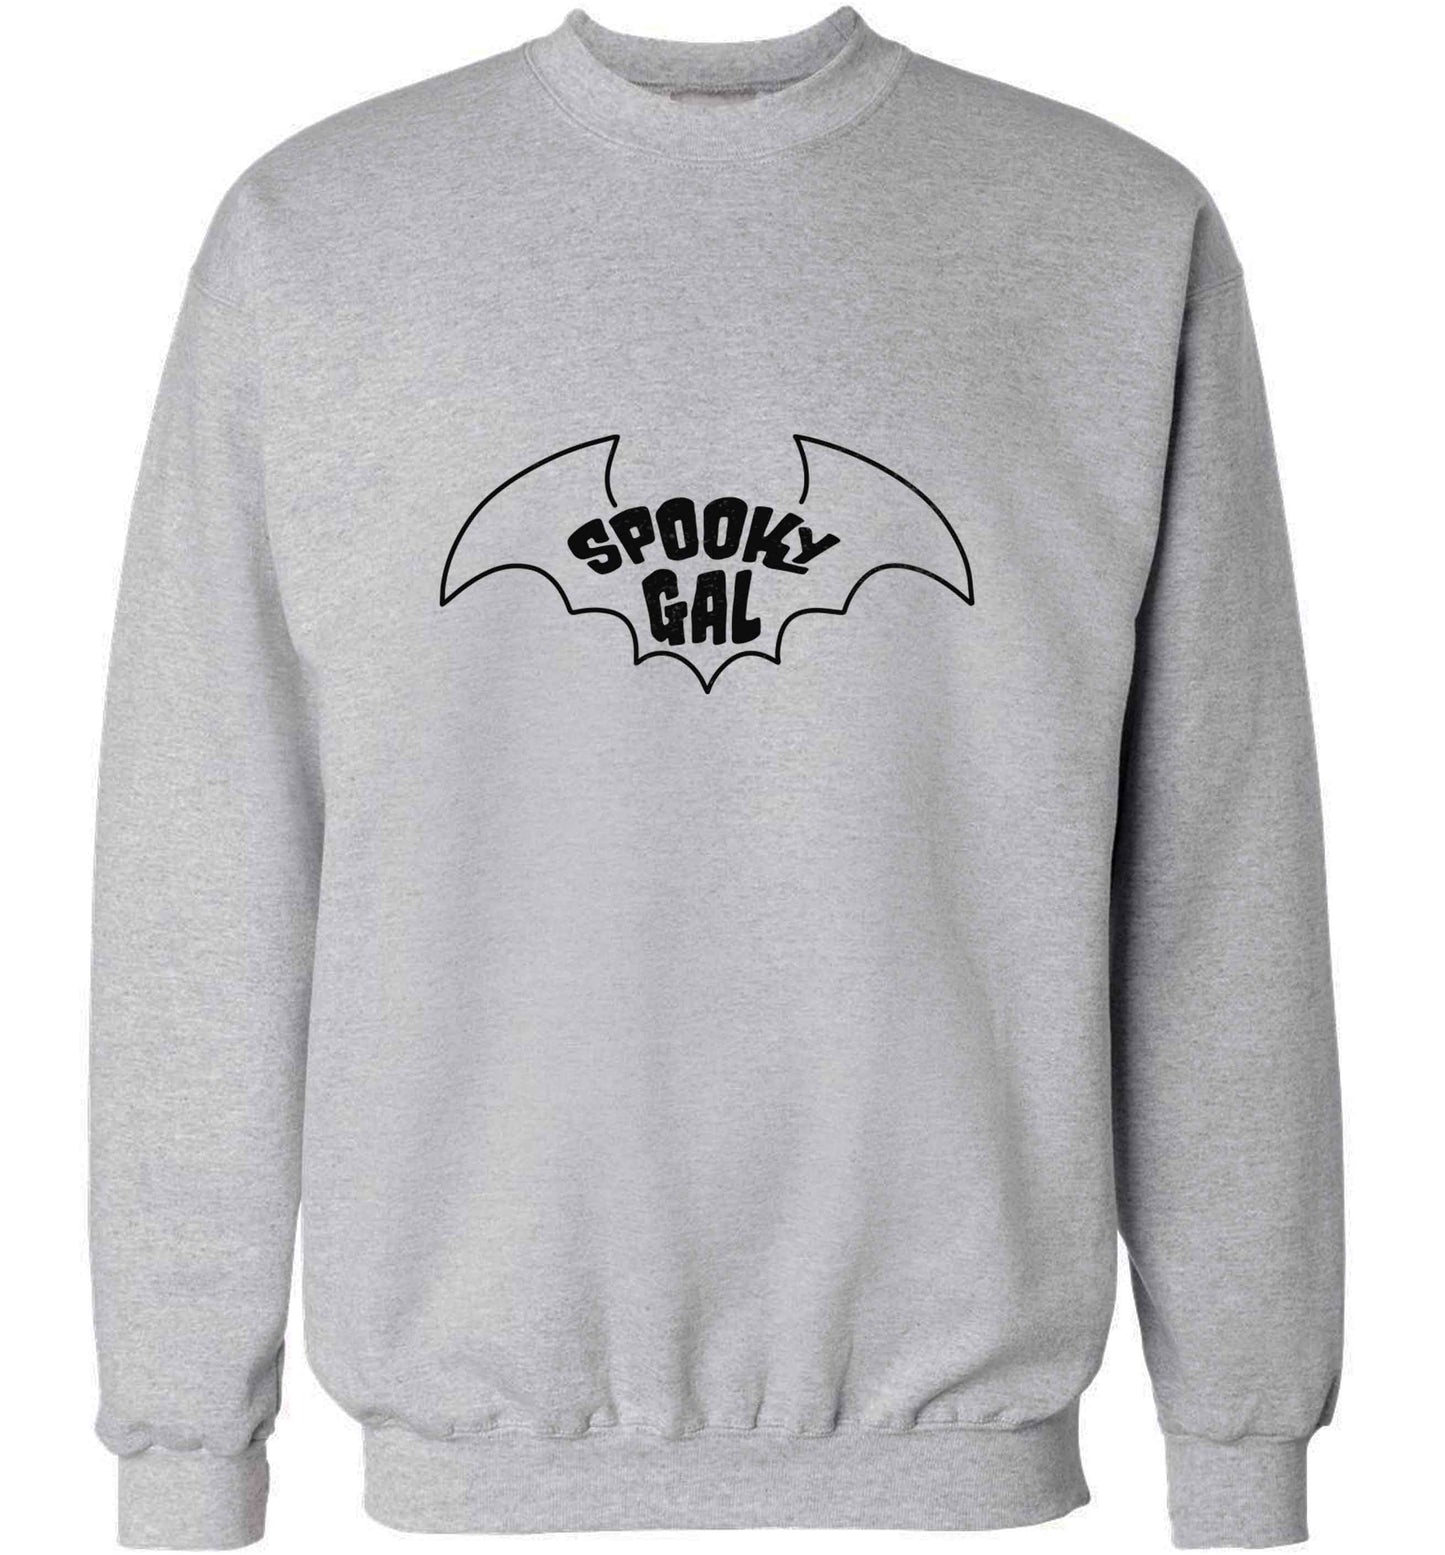 Spooky gal Kit adult's unisex grey sweater 2XL